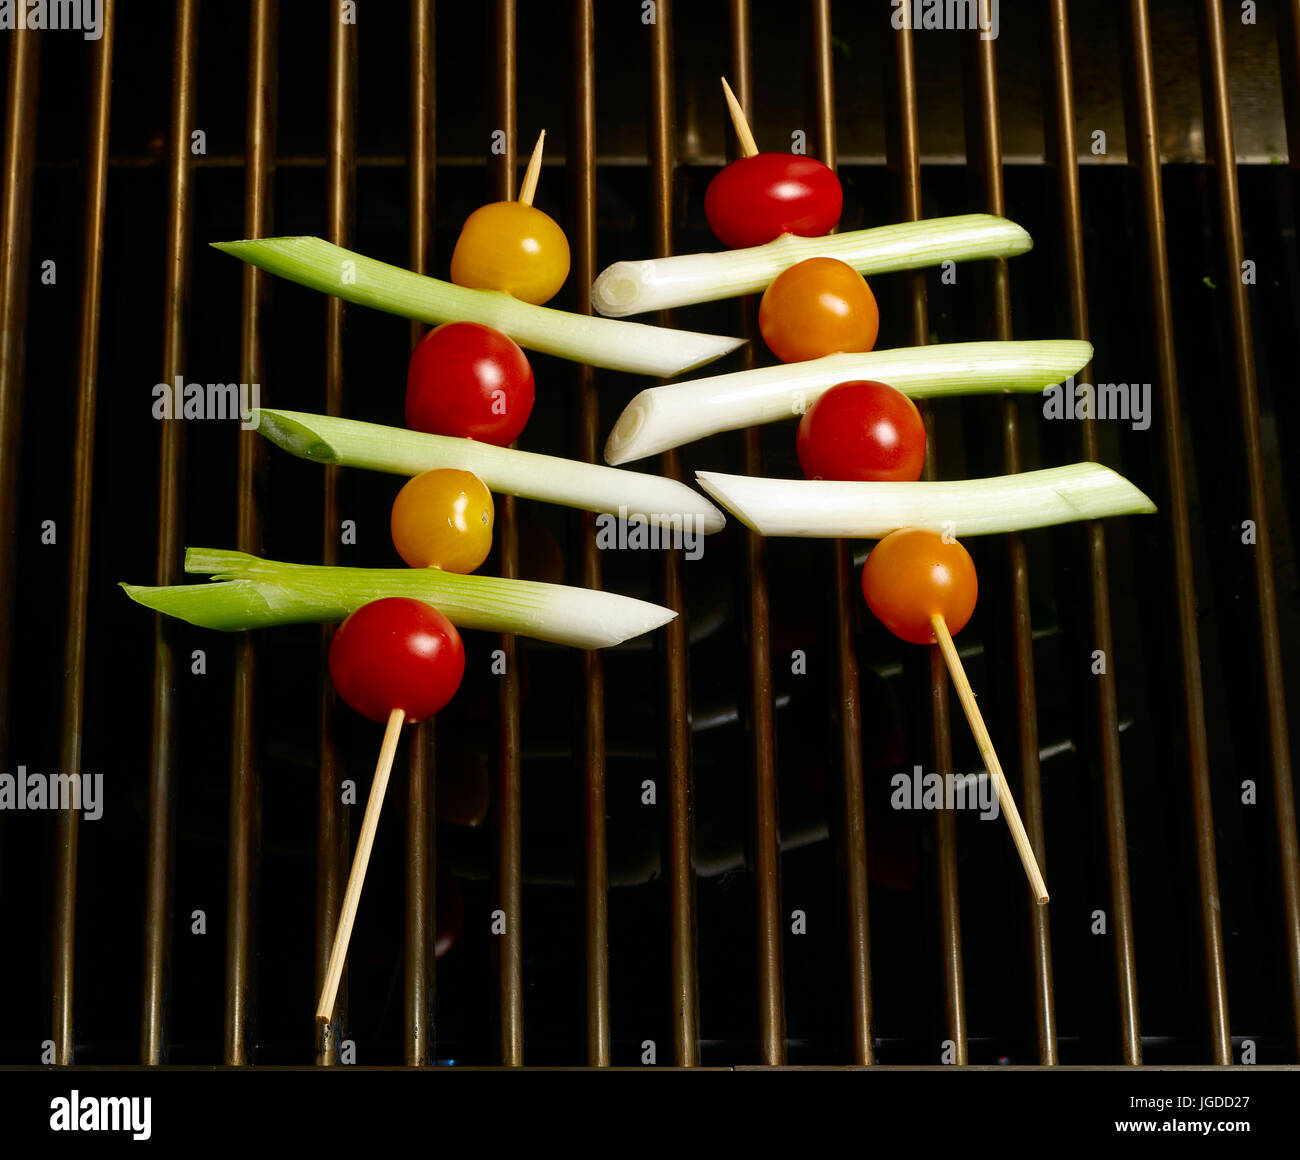 Vegetable shish kebabs Stock Photo